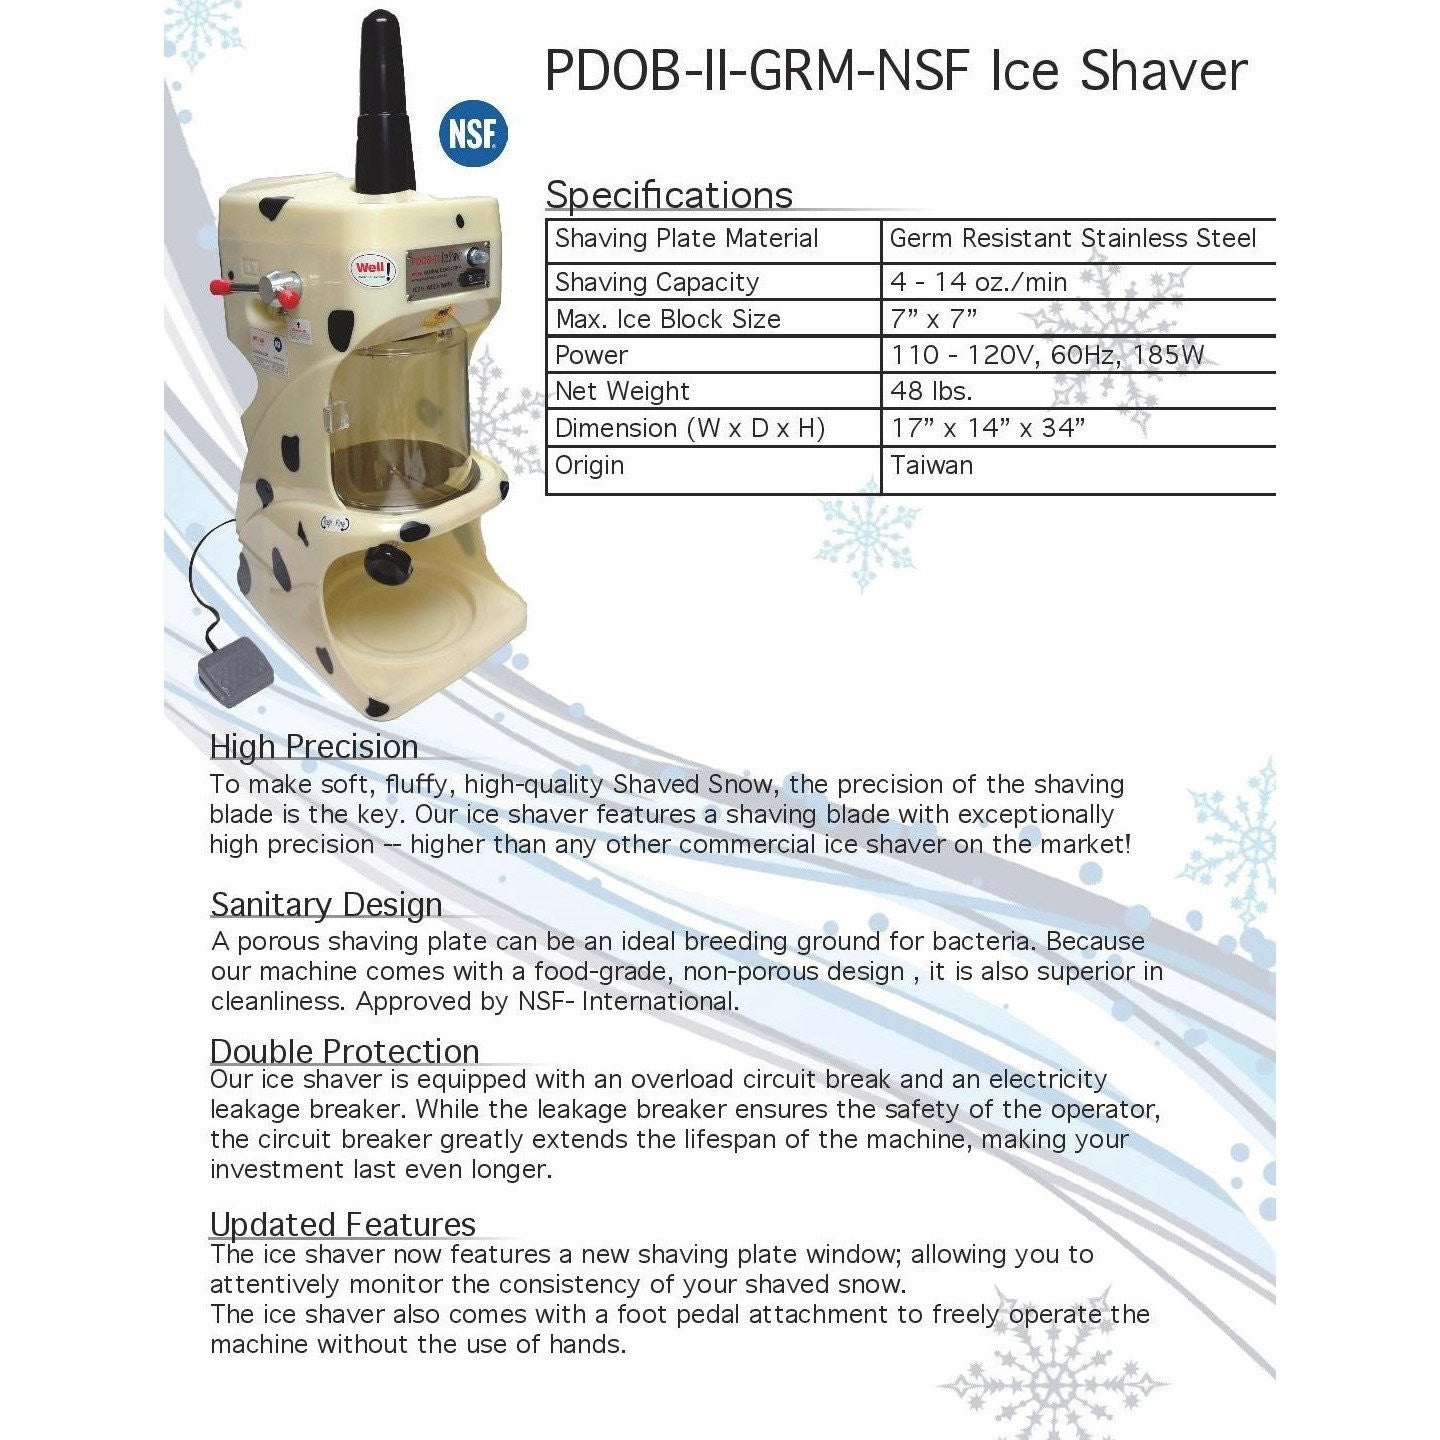 Shaved Ice Machine - PDOB-II-GRM-NSF Ice Shaver - IcySkyy